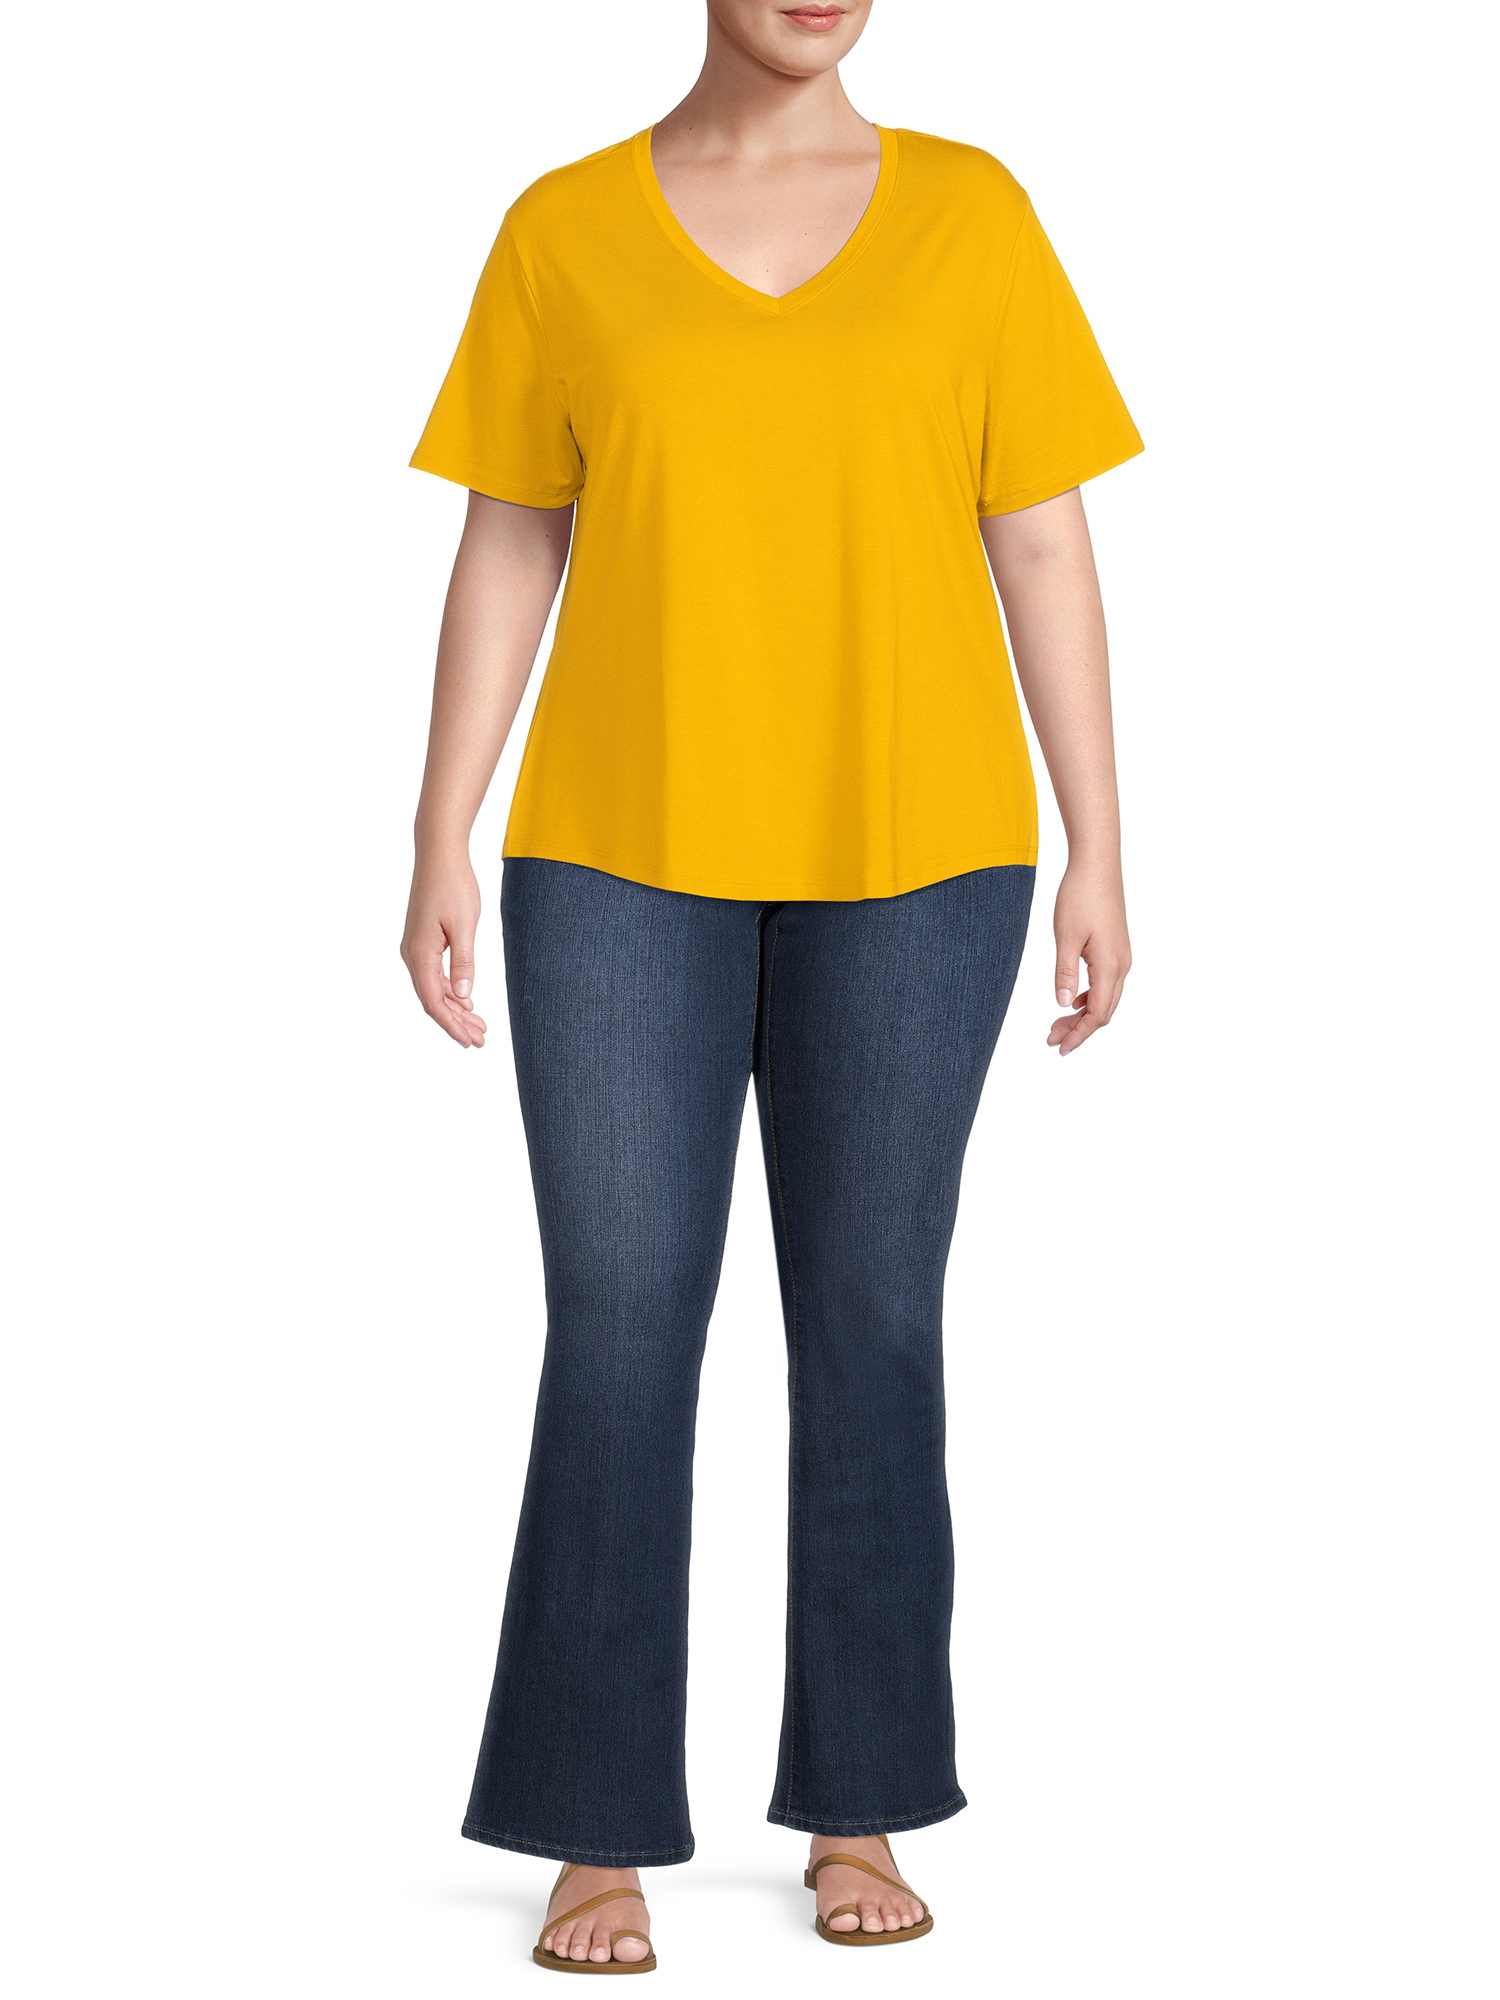 Terra & Sky Women's Plus Size Bootcut Jeans - image 4 of 6